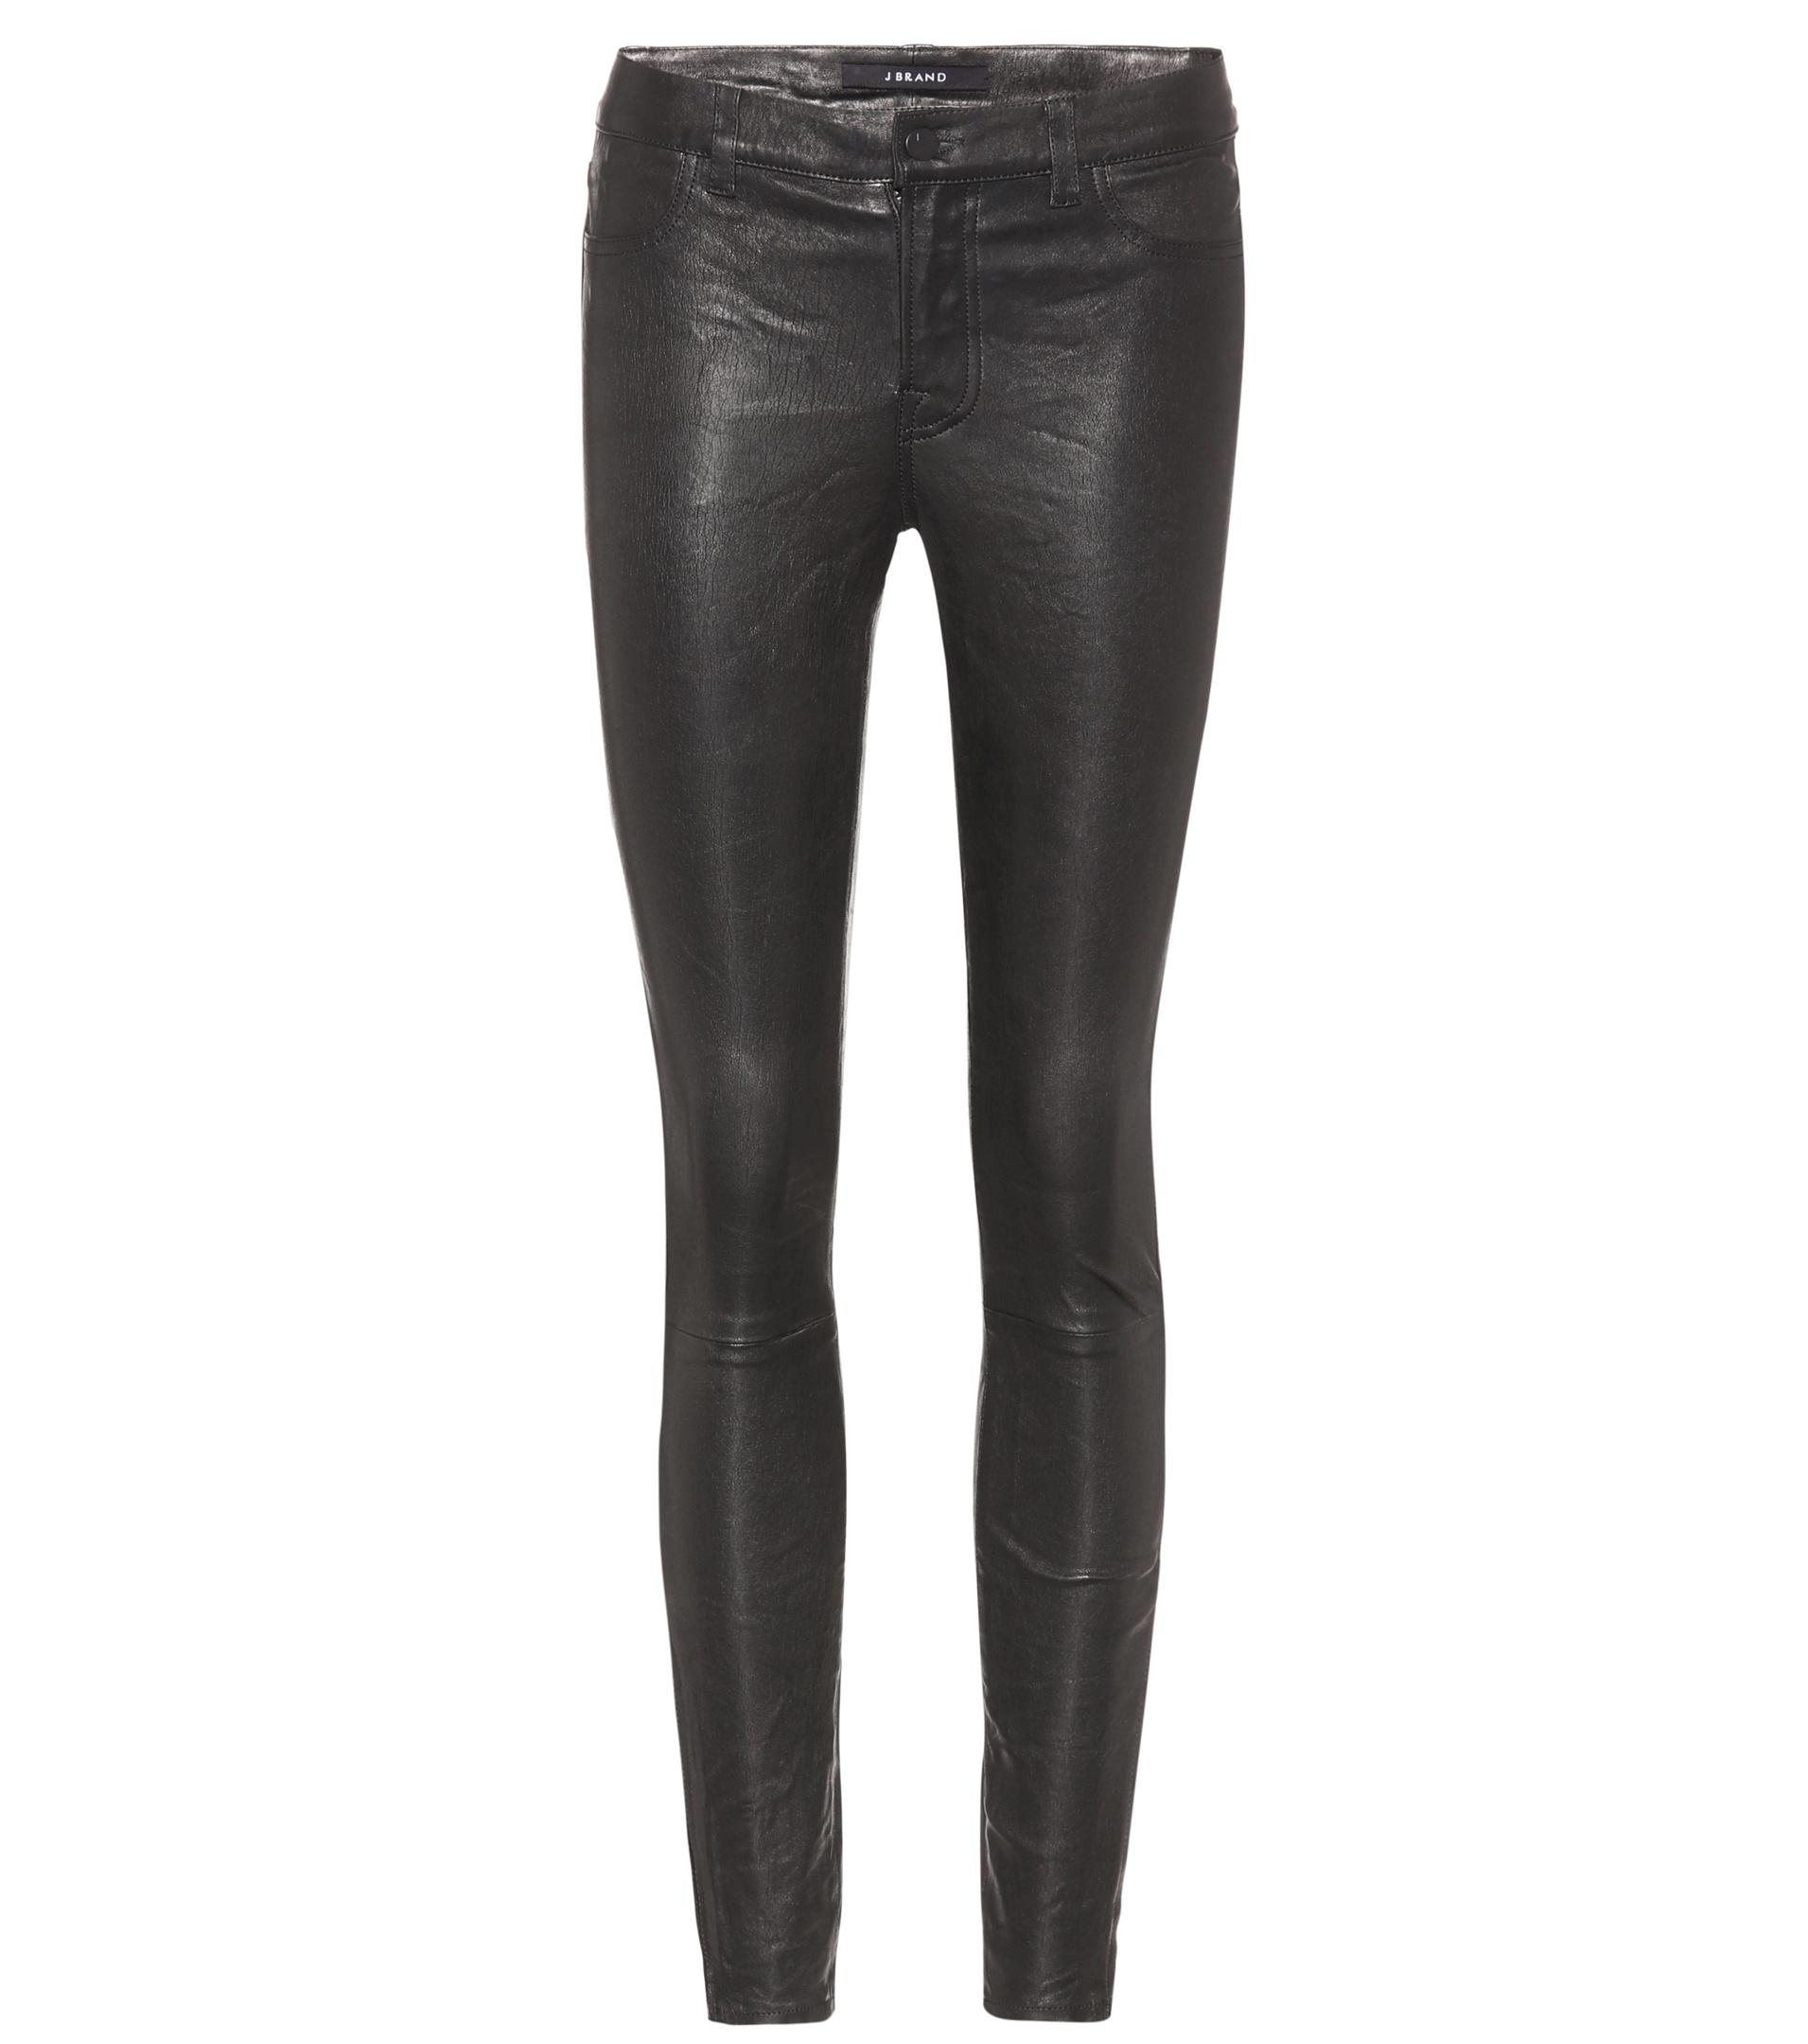 J Brand Super Skinny Leather Trousers in Black - Lyst